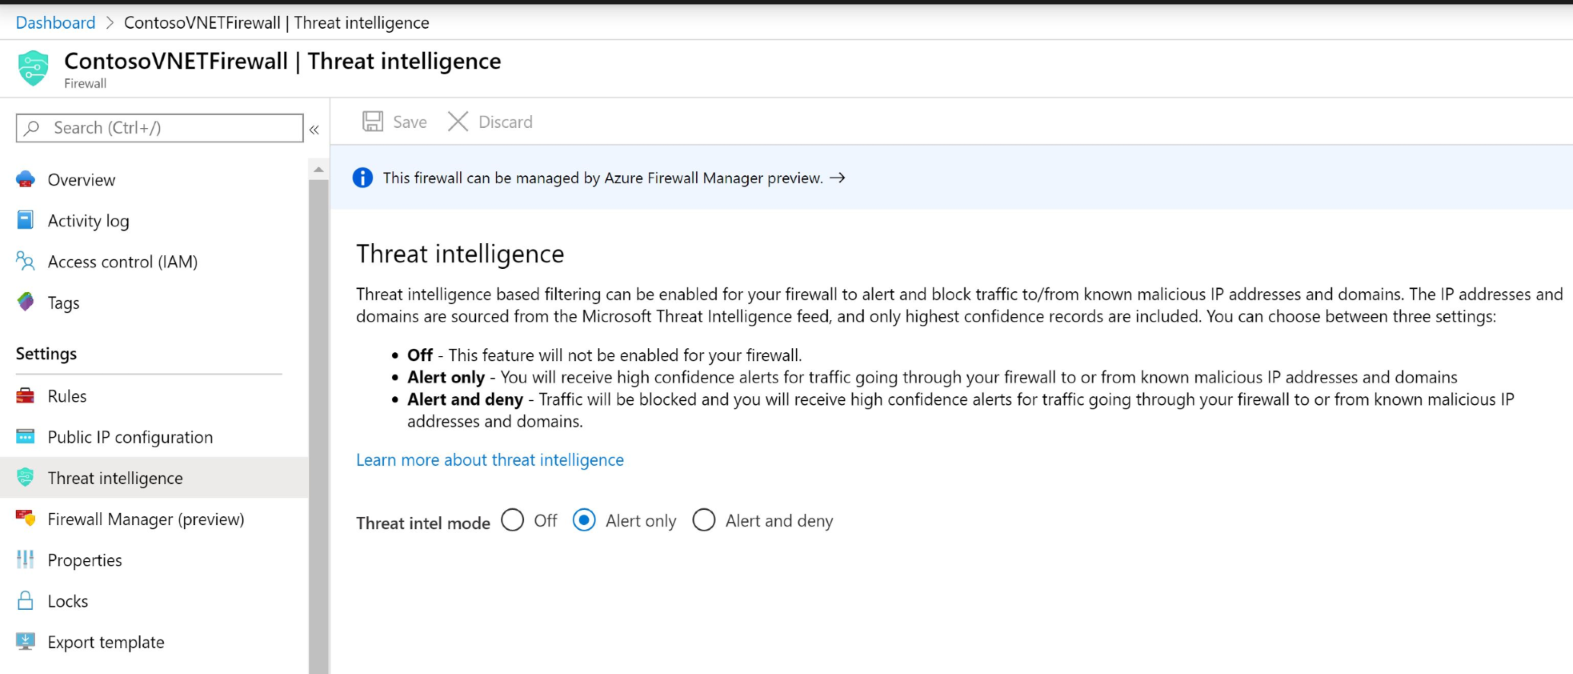 Threat intelligence based filtering portal interface